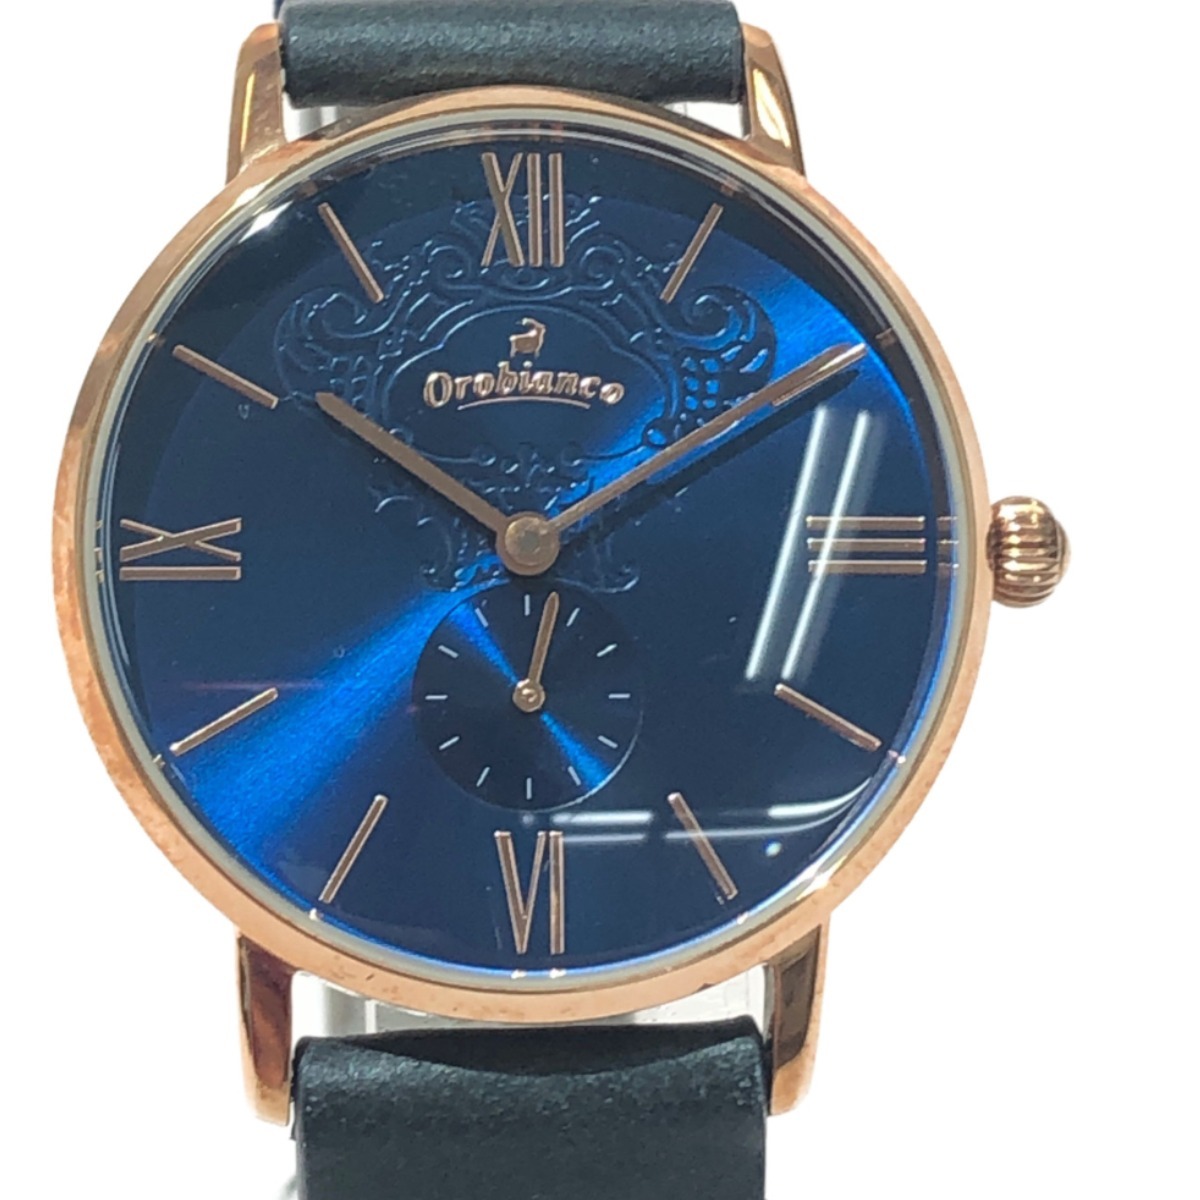 ▼▼ Orobianco オロビアンコ シンパティア SIMMPATIA レディース腕時計 付属品有 OR0072-5 ブルー やや傷や汚れあり